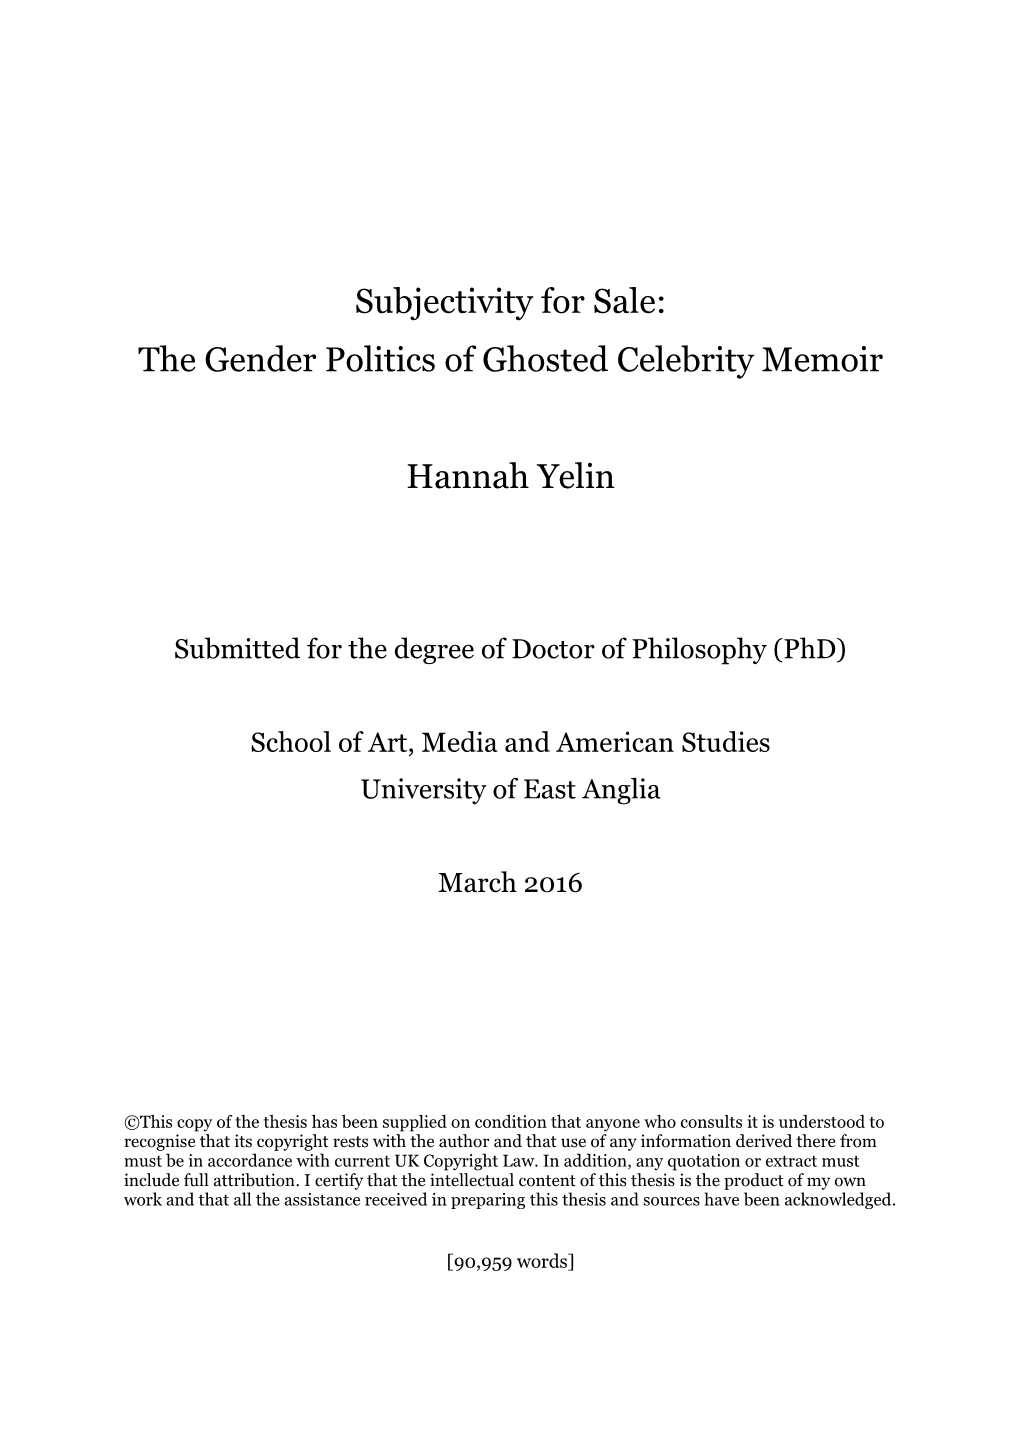 The Gender Politics of Ghosted Celebrity Memoir Hannah Yelin